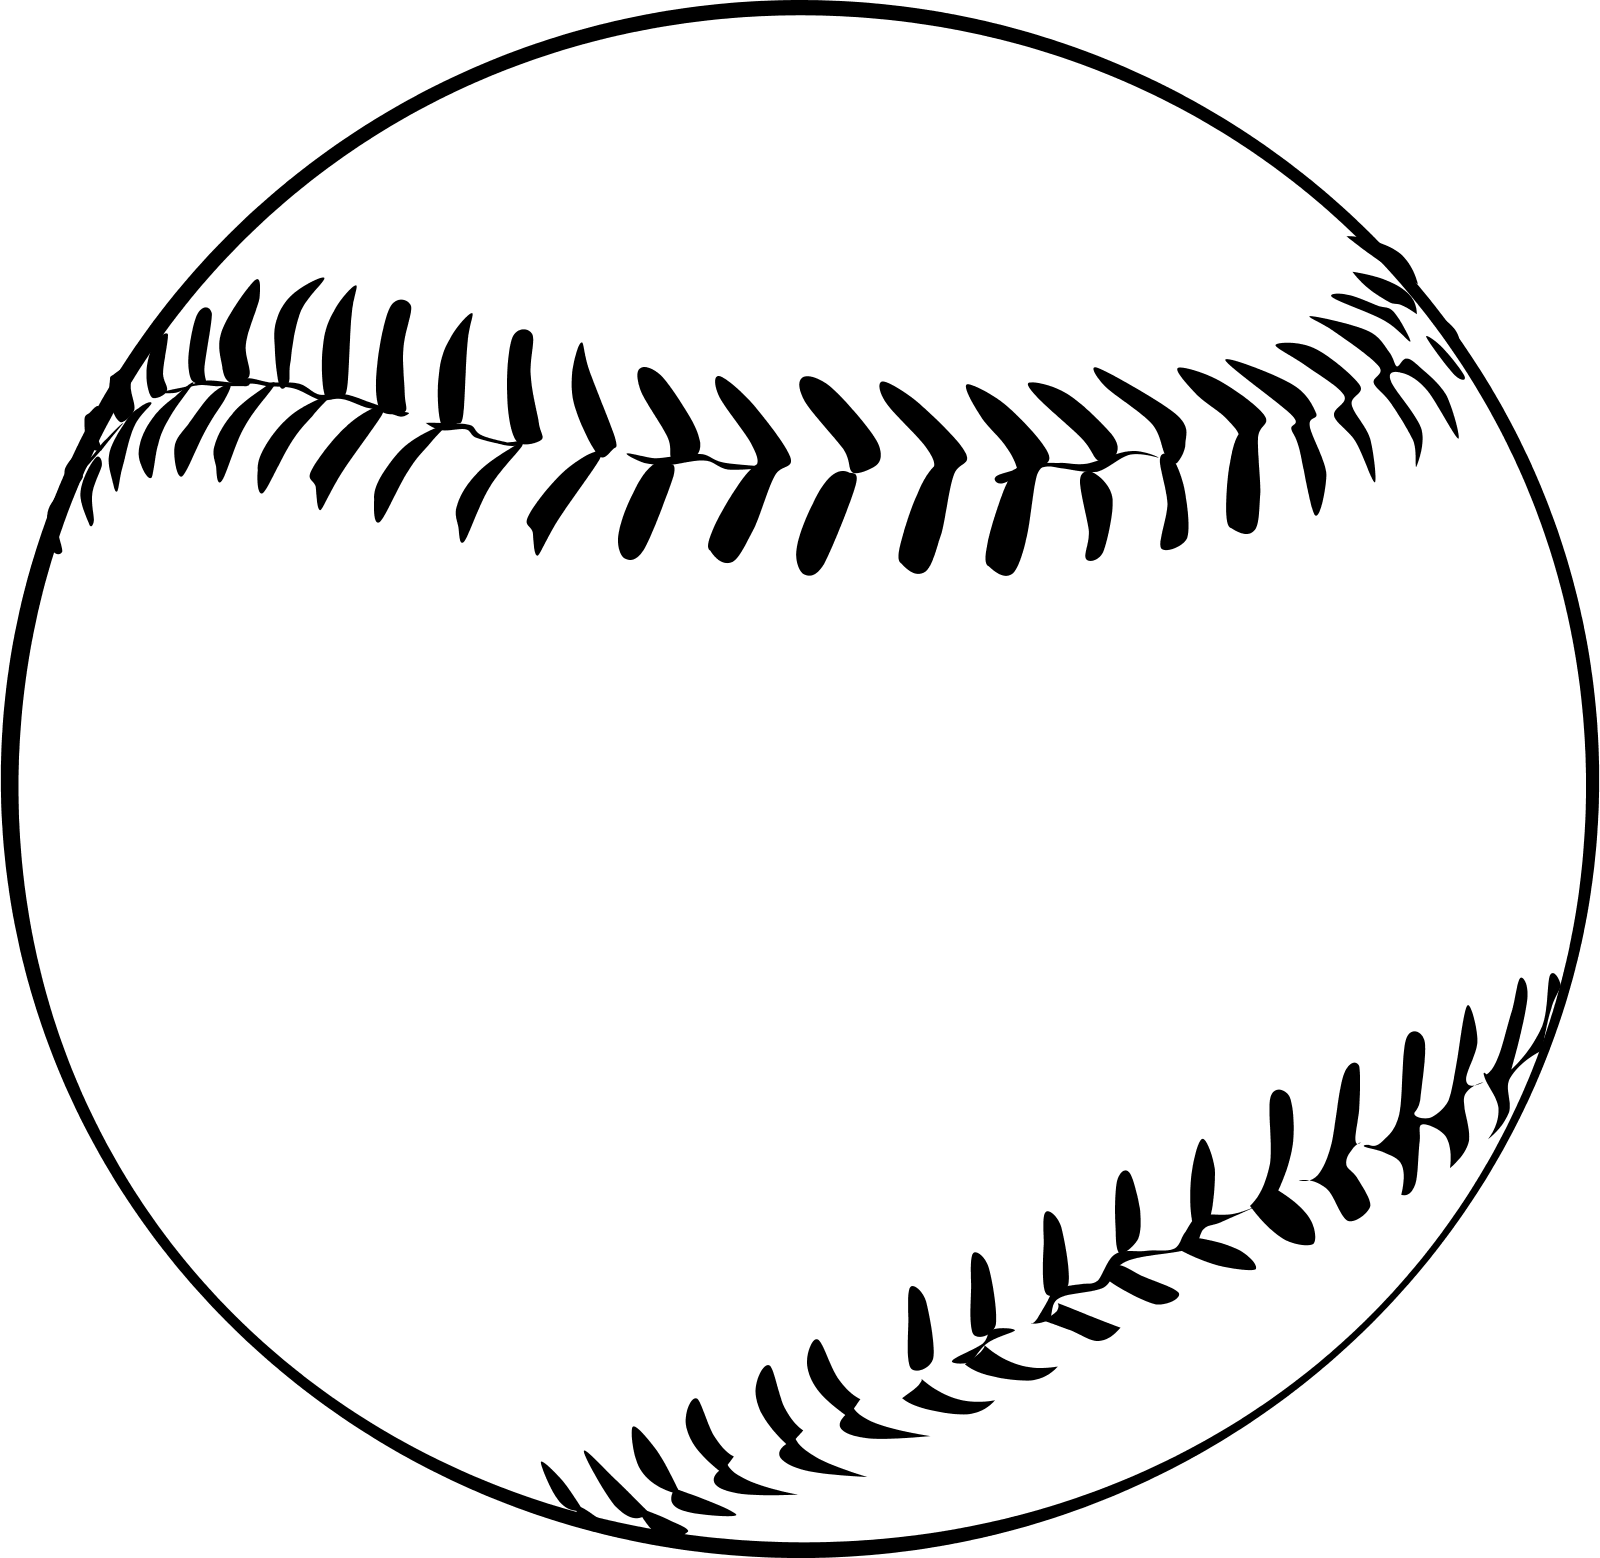 Black and White Baseball Logo - Baseball logos image royalty free stock